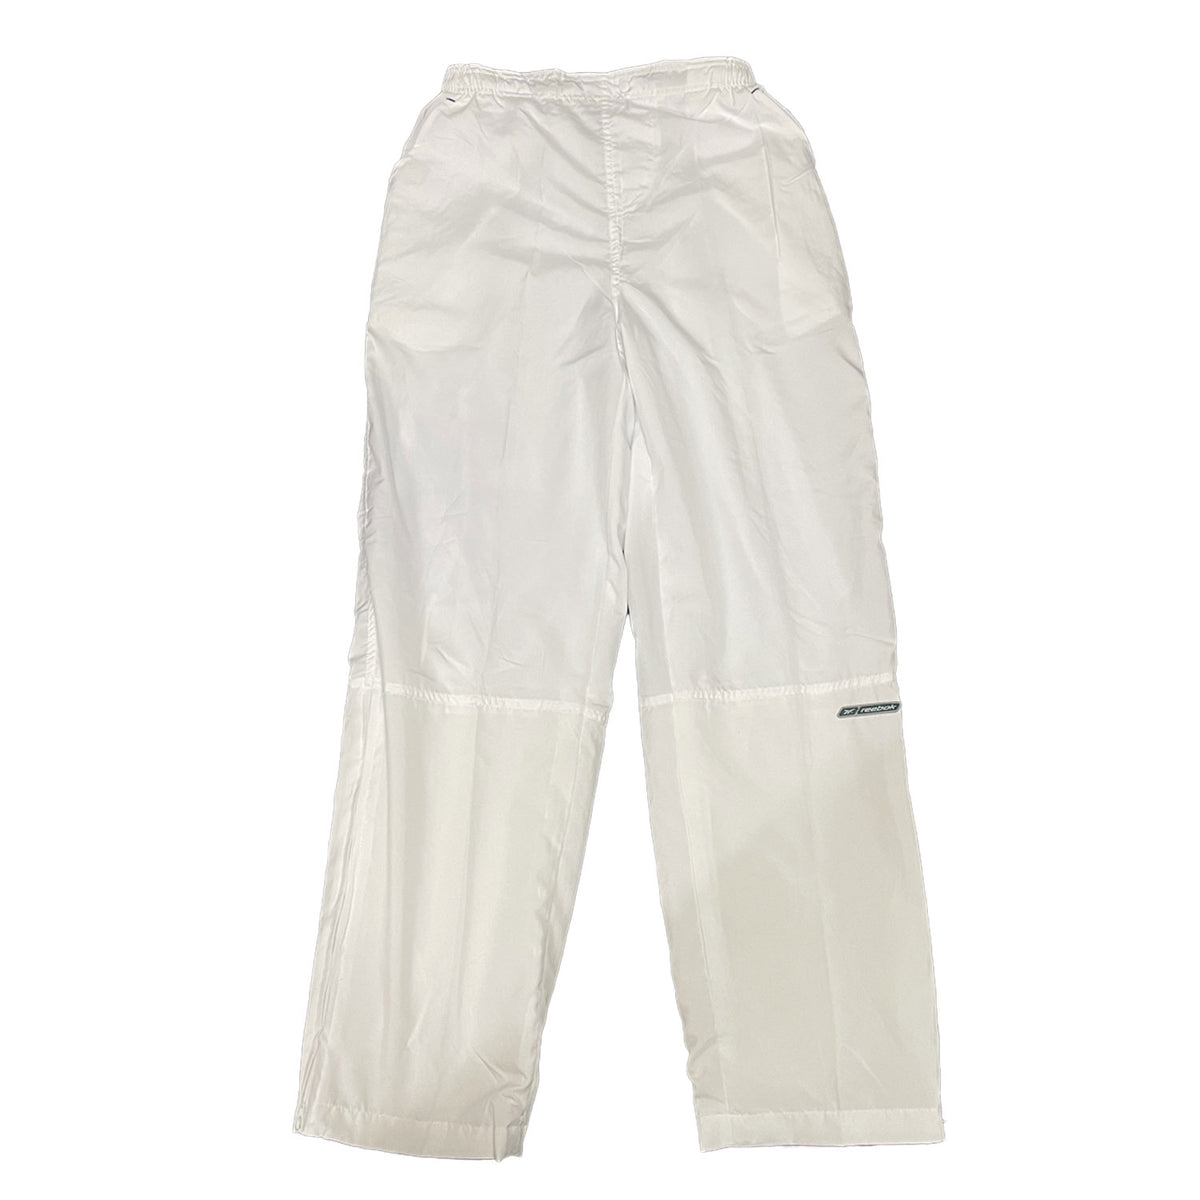 Reebok Mens Classic Athletes Track Pants - White - Medium